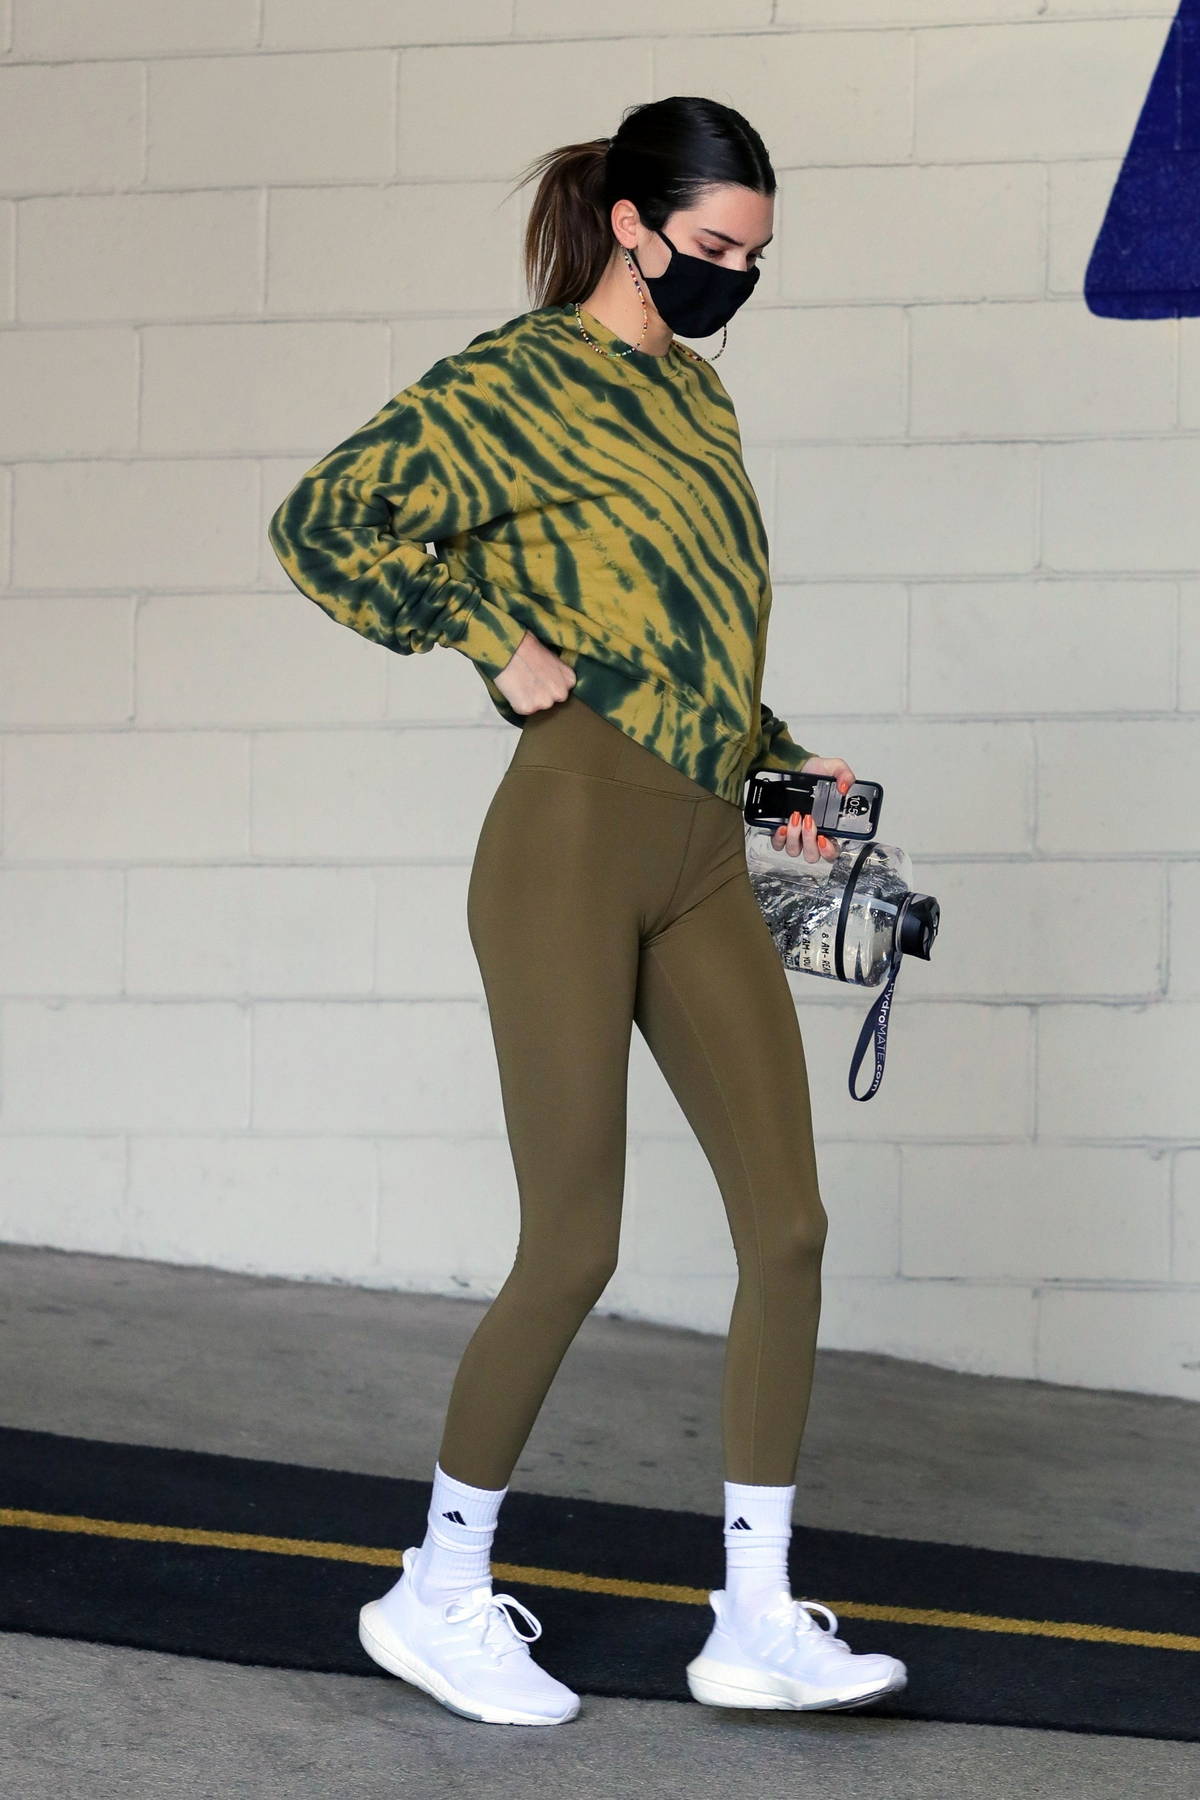 Kendall Jenner Wore the Controversial Capri Legging Trend